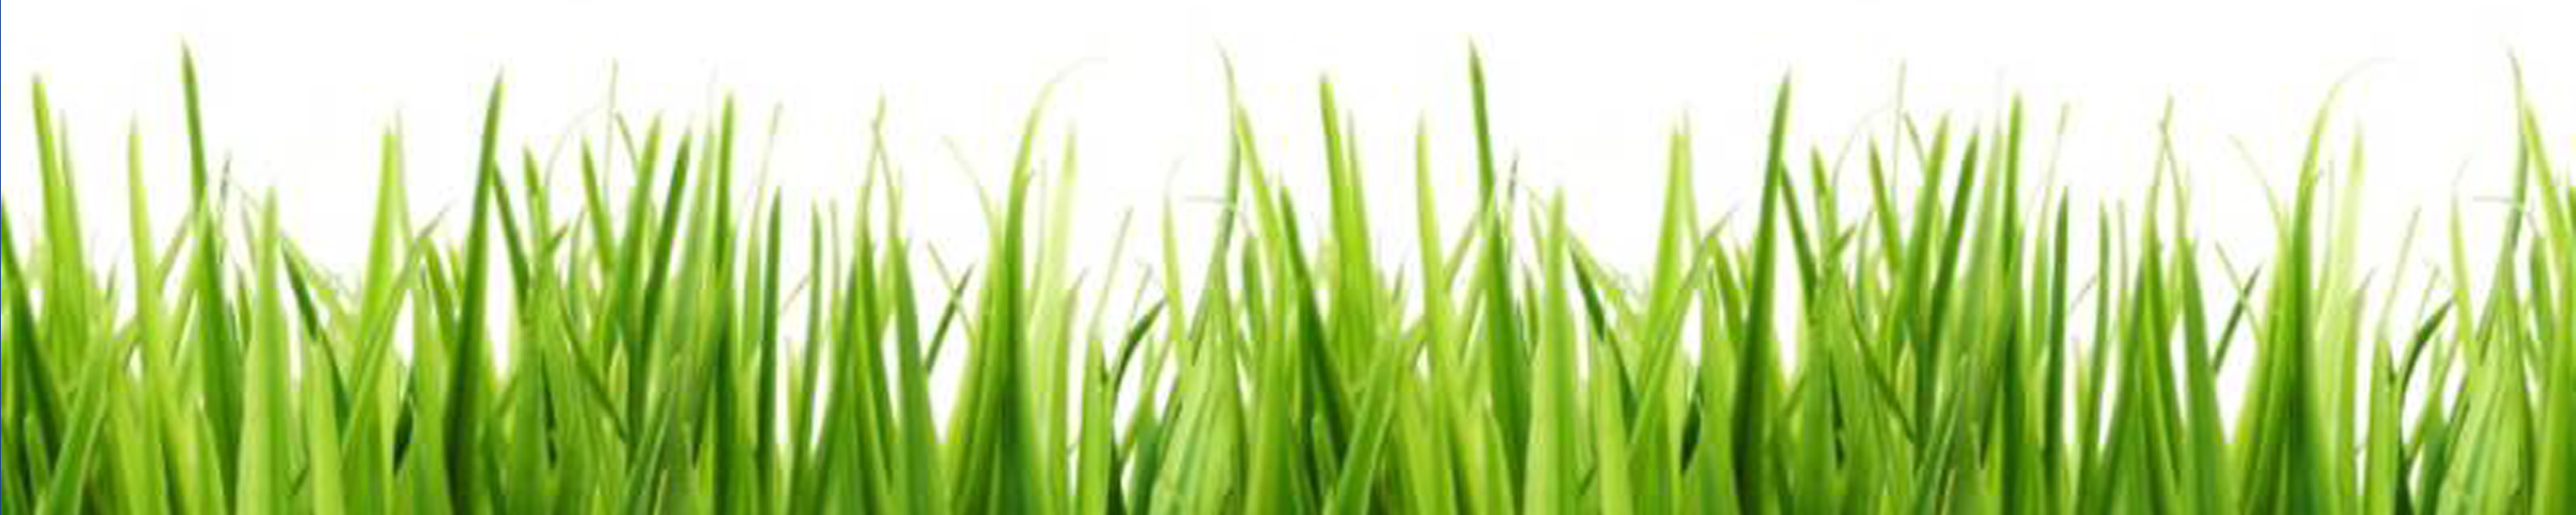 Grass Image Hd Photos Clipart